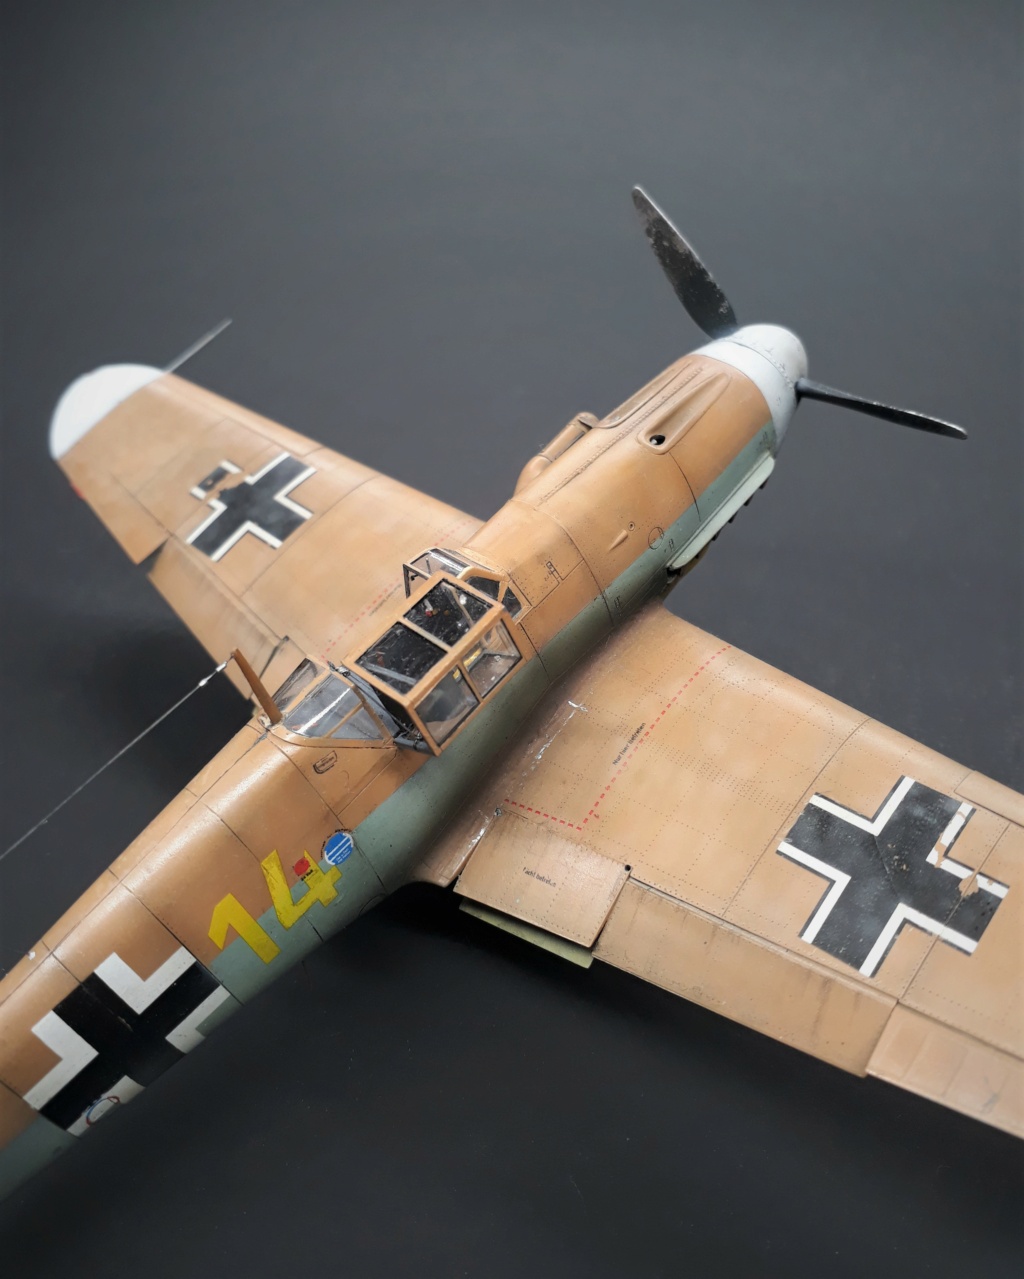 Bf 109F-4/trop, 3./JG 27, North Africa, February 1942 20220771